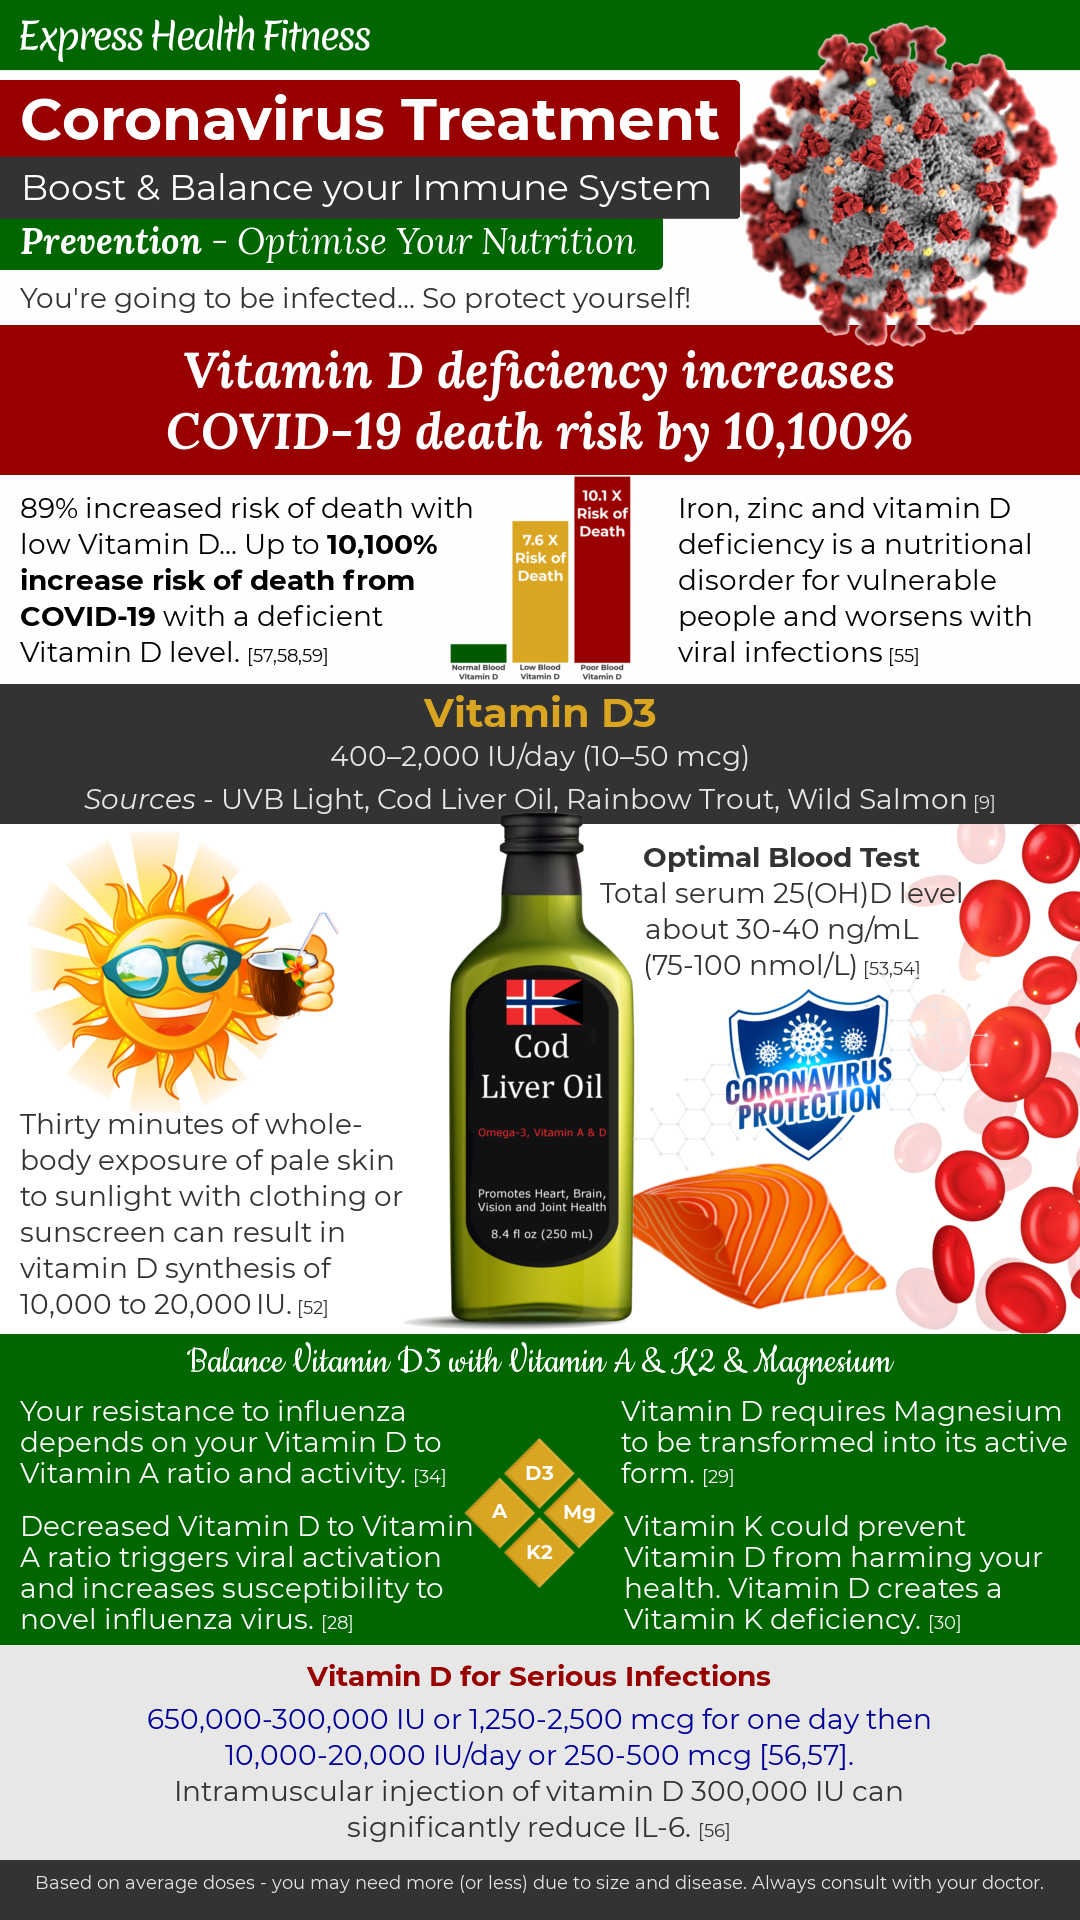 Coronavirus Treatment - Nutrition & Supplements - Prevention - Vitamin D